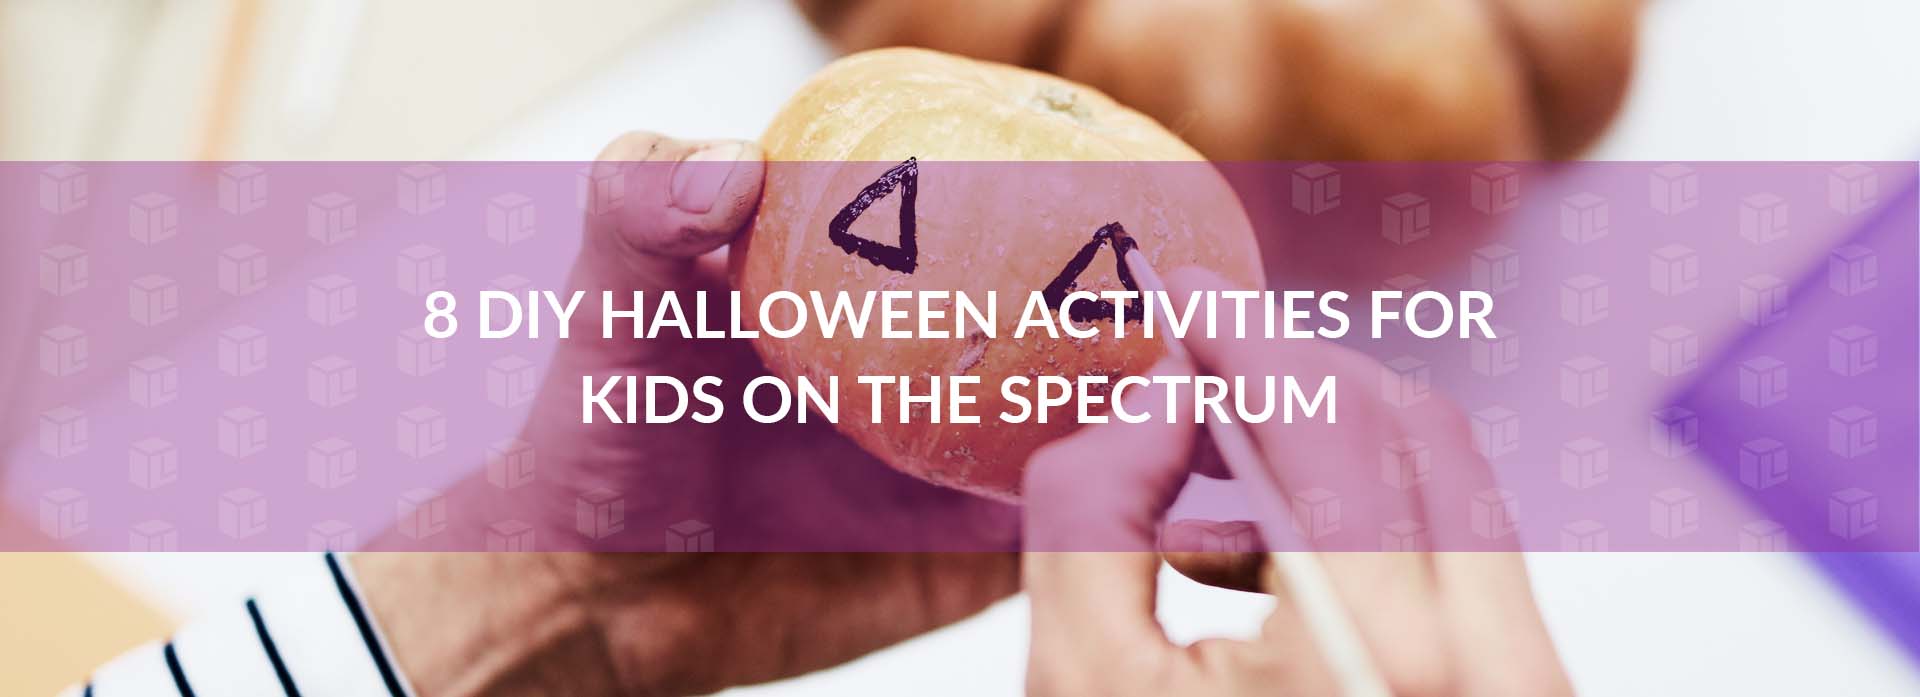 8-diy-halloween-activities-for-kids-on-the-spectrum-lexington-services